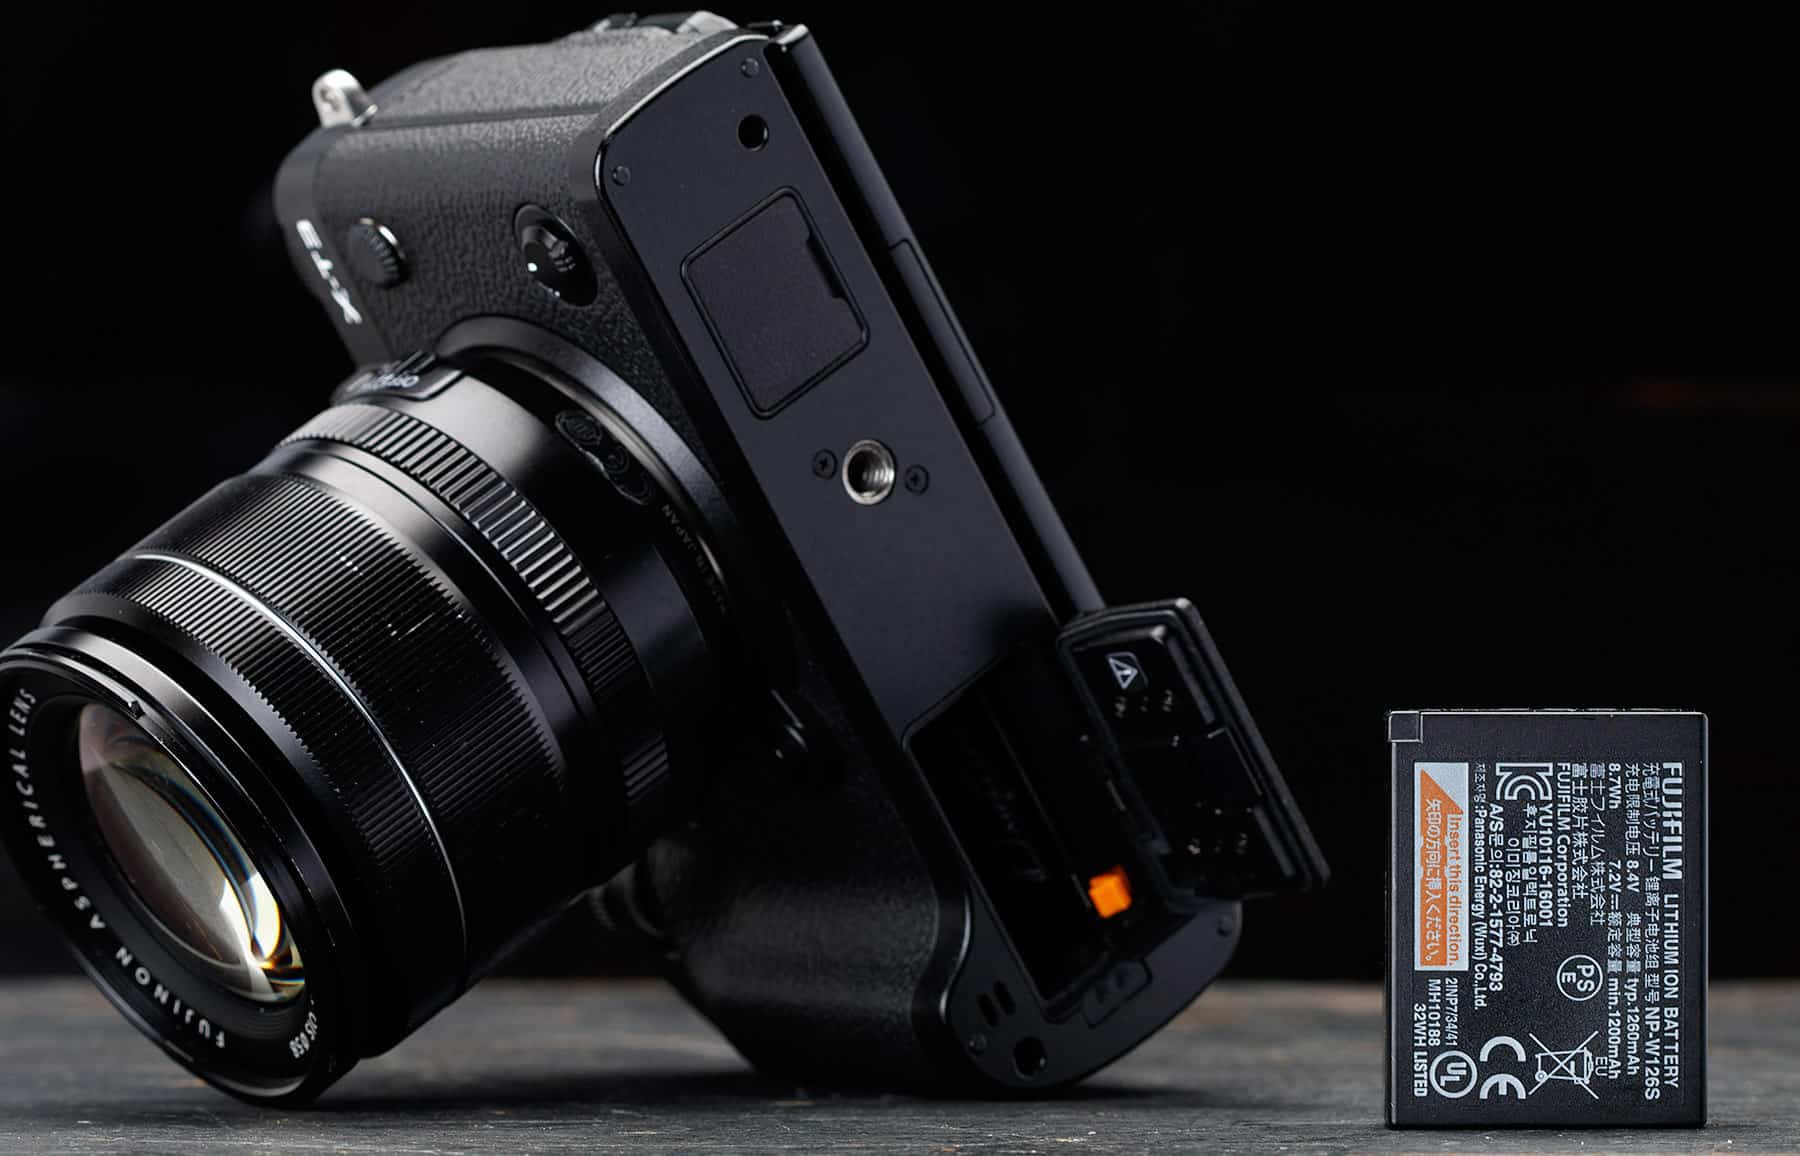 Máy ảnh Fujifilm X-T3 WW (Black)